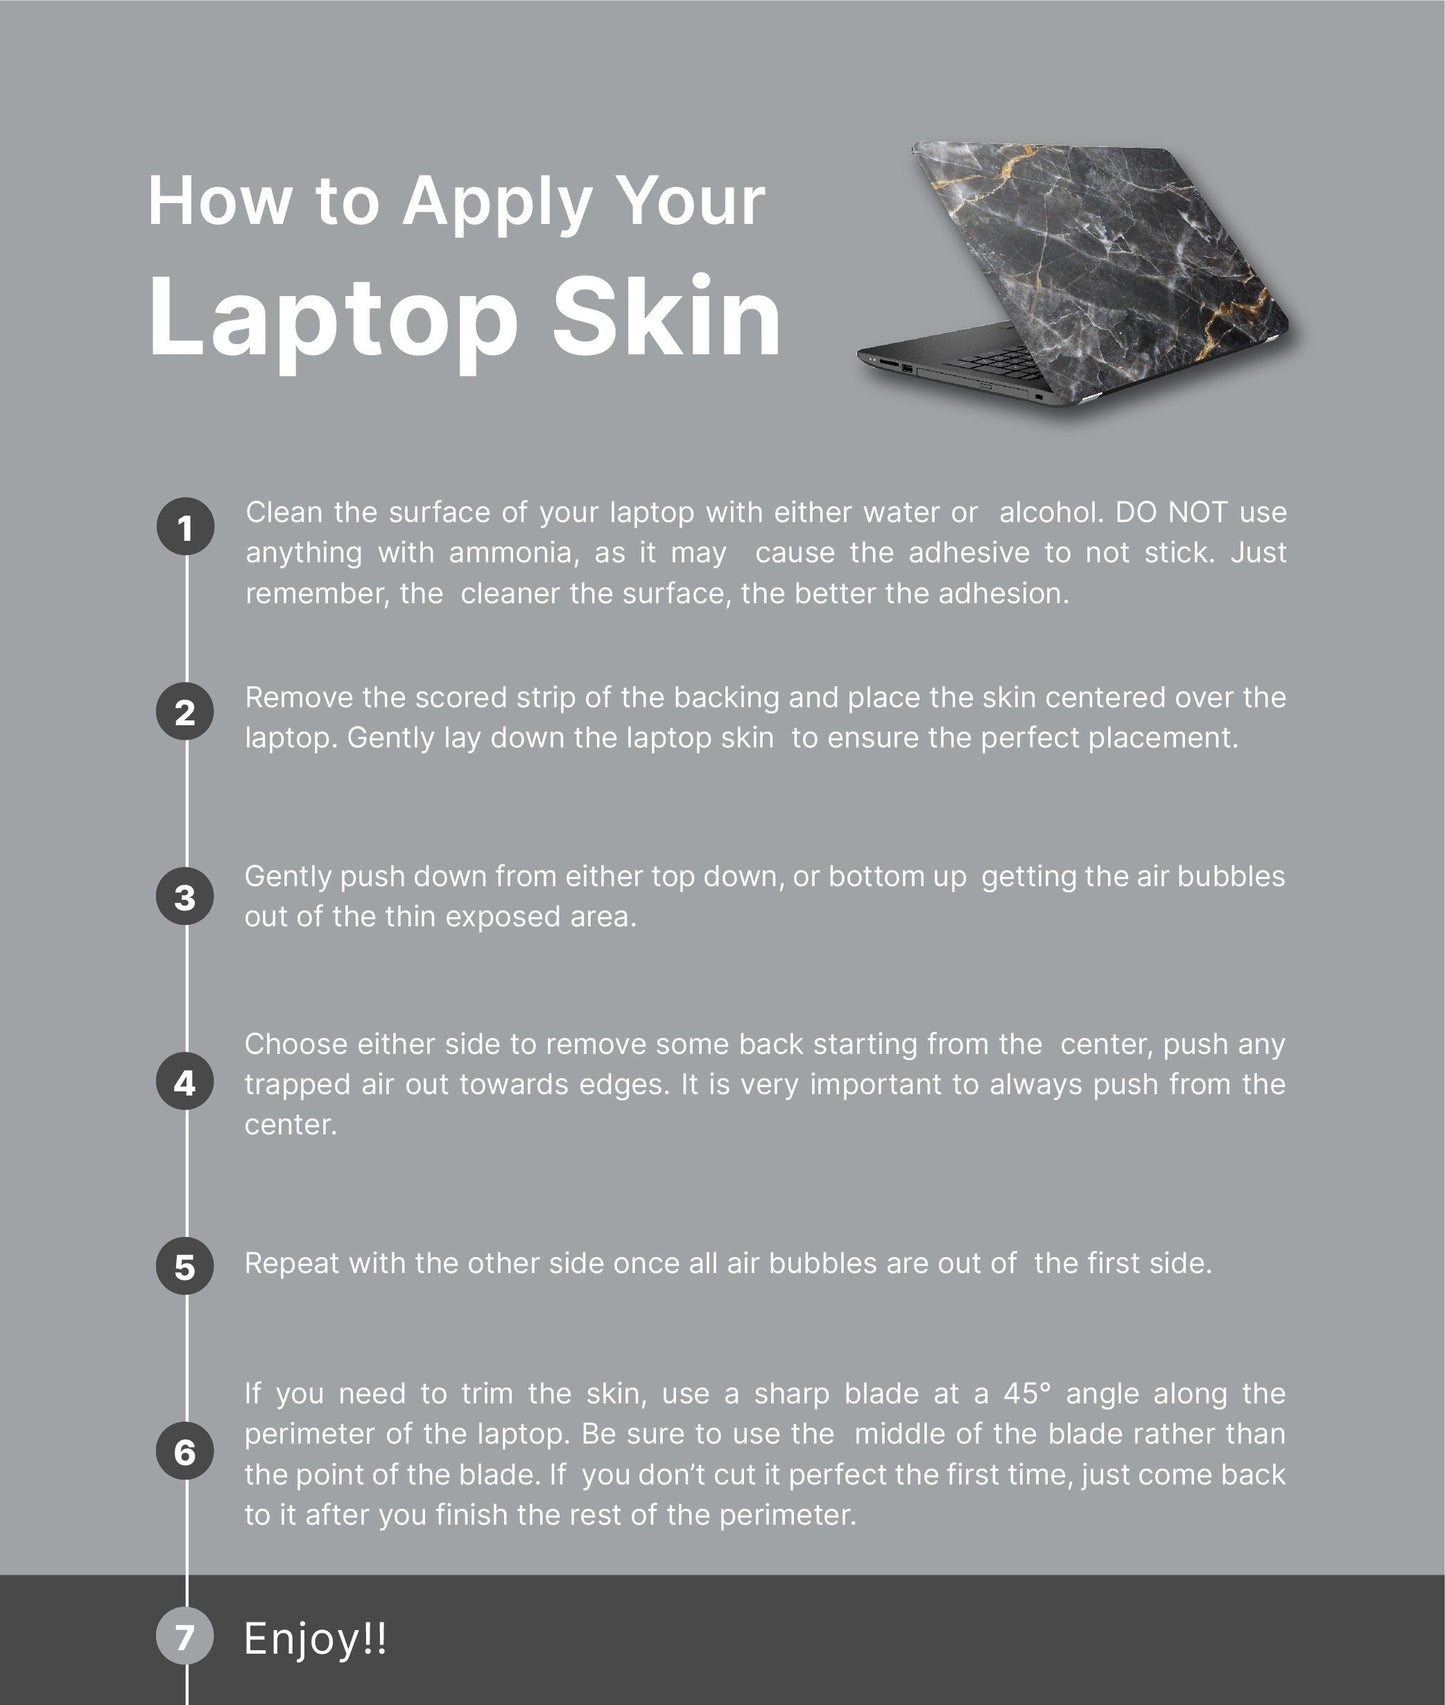 Bunny Garden Laptop Skin, Laptop Cover, Laptop Skins, Removable Laptop Skins, Laptop Decal, Customized Laptop Skin, Laptop Stickers 332